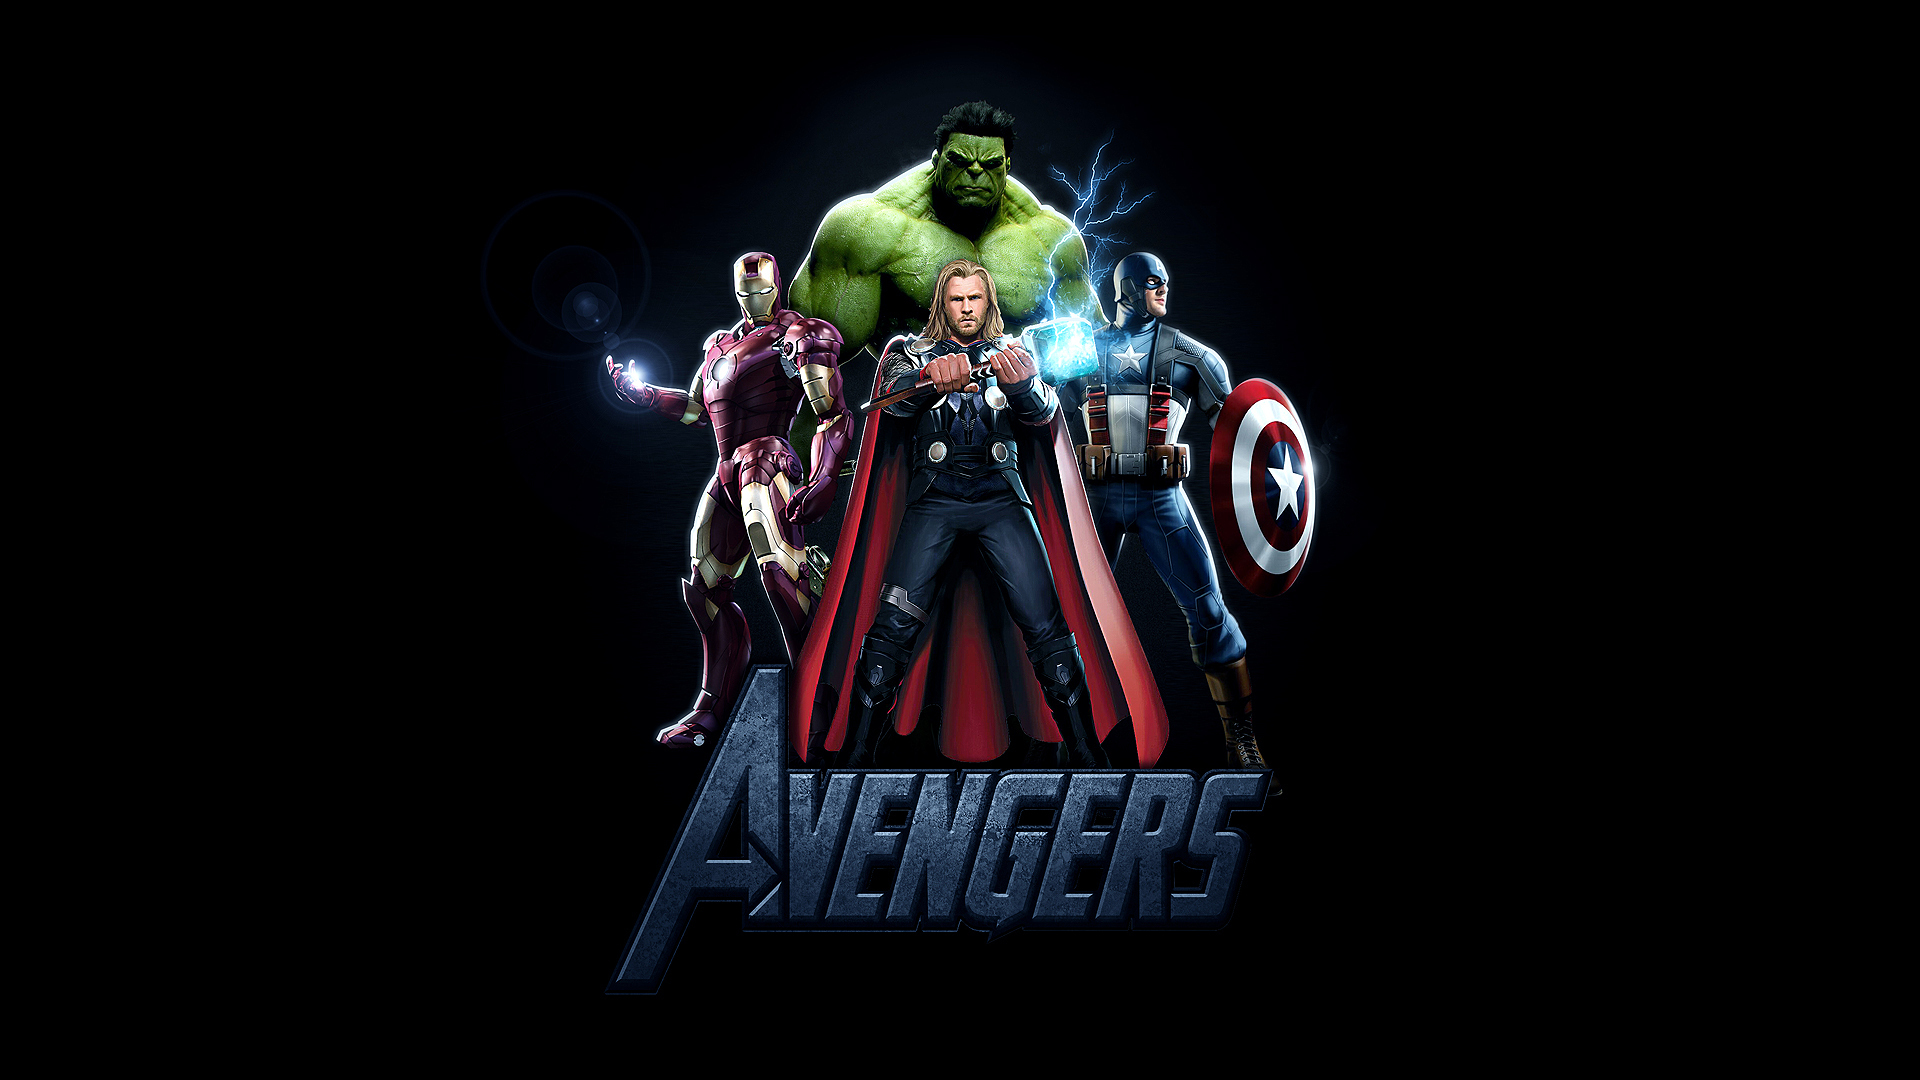 The Avengers Assemble Wallpaper